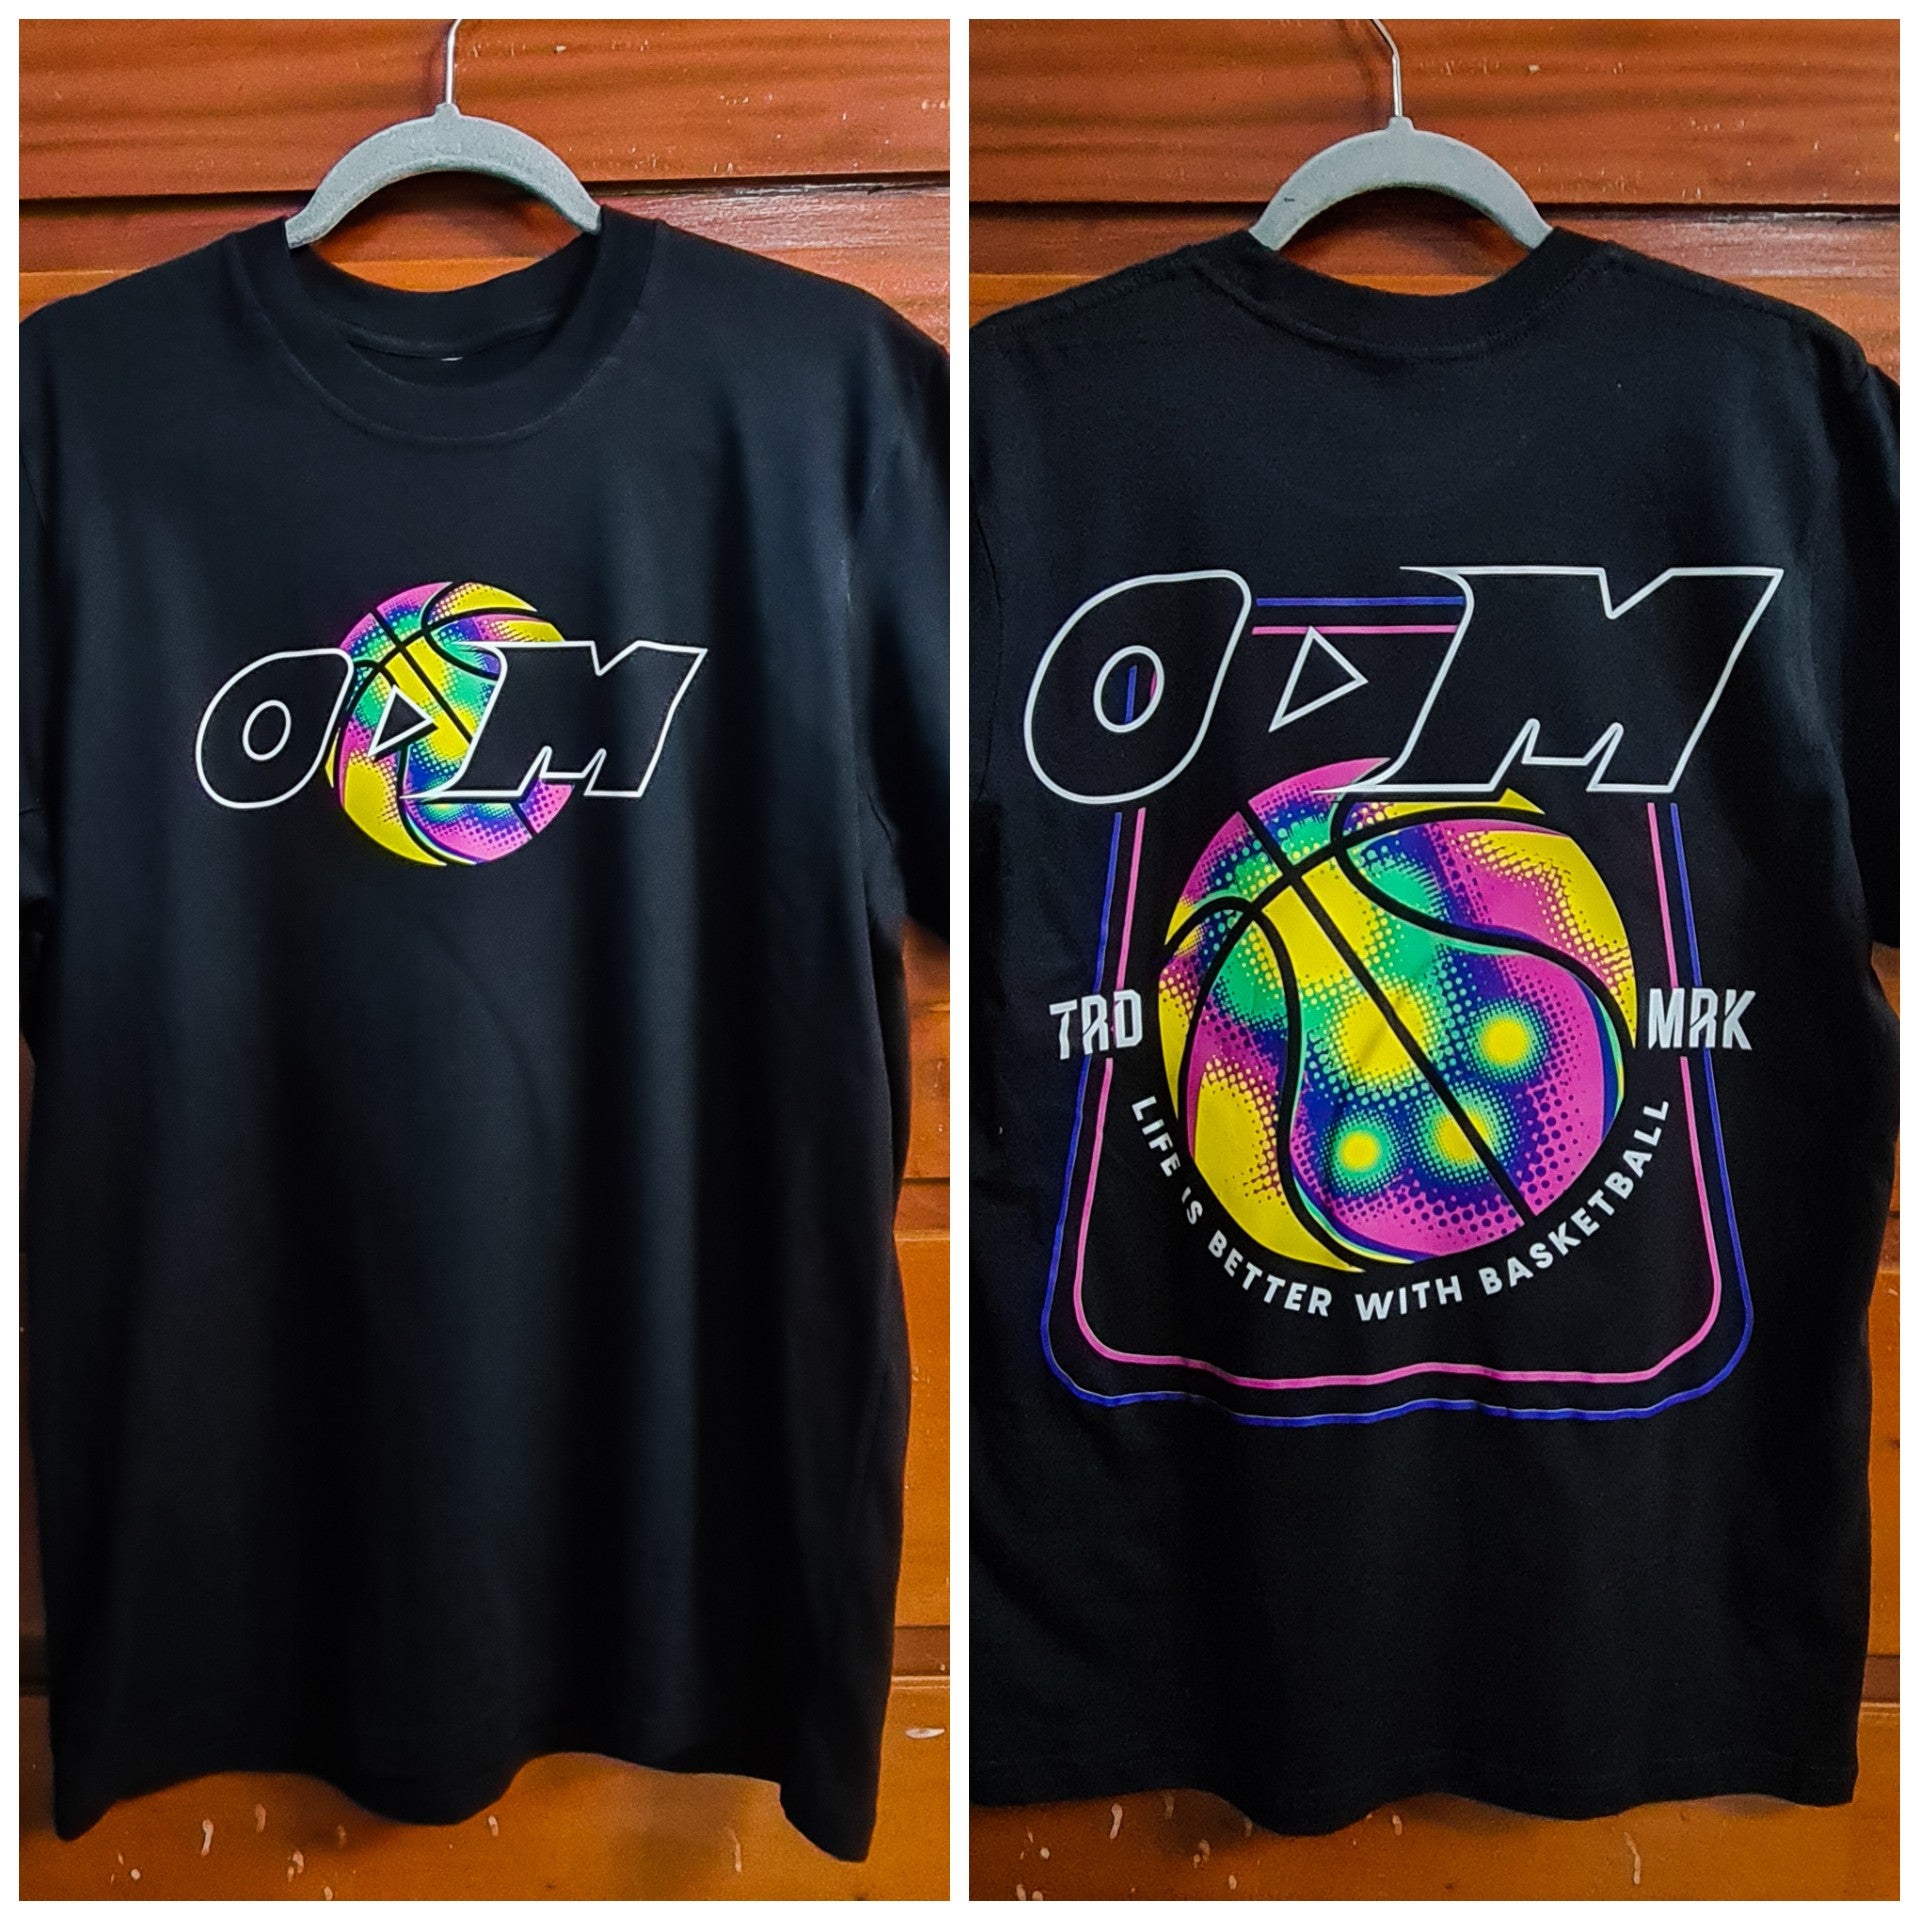 ODM Hoops Multicolored Ball Shirt